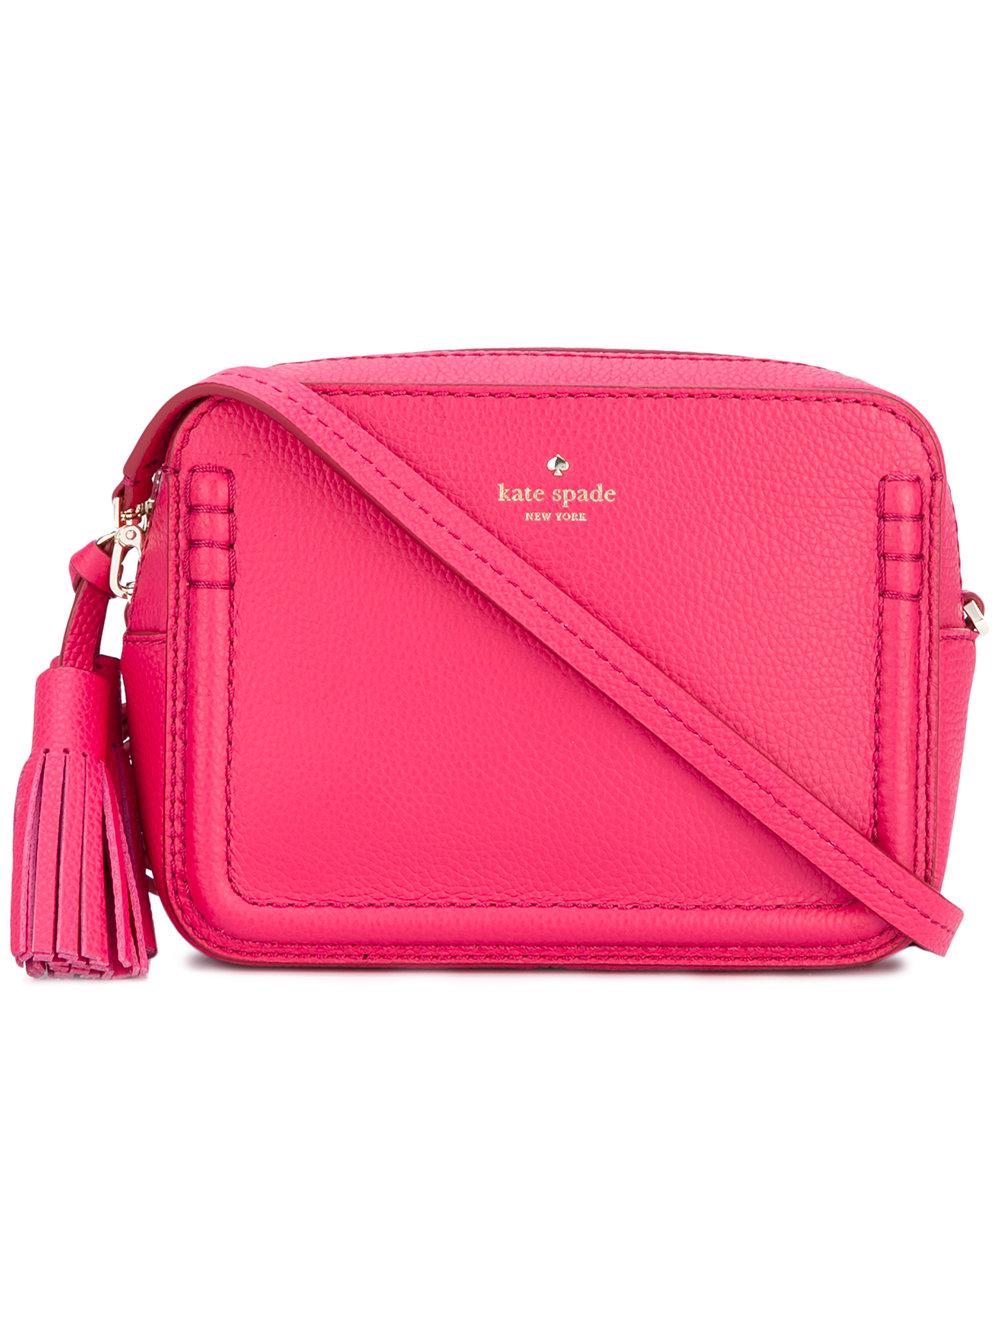 Lyst - Kate spade new york Tassel Detail Crossbody Bag in Pink